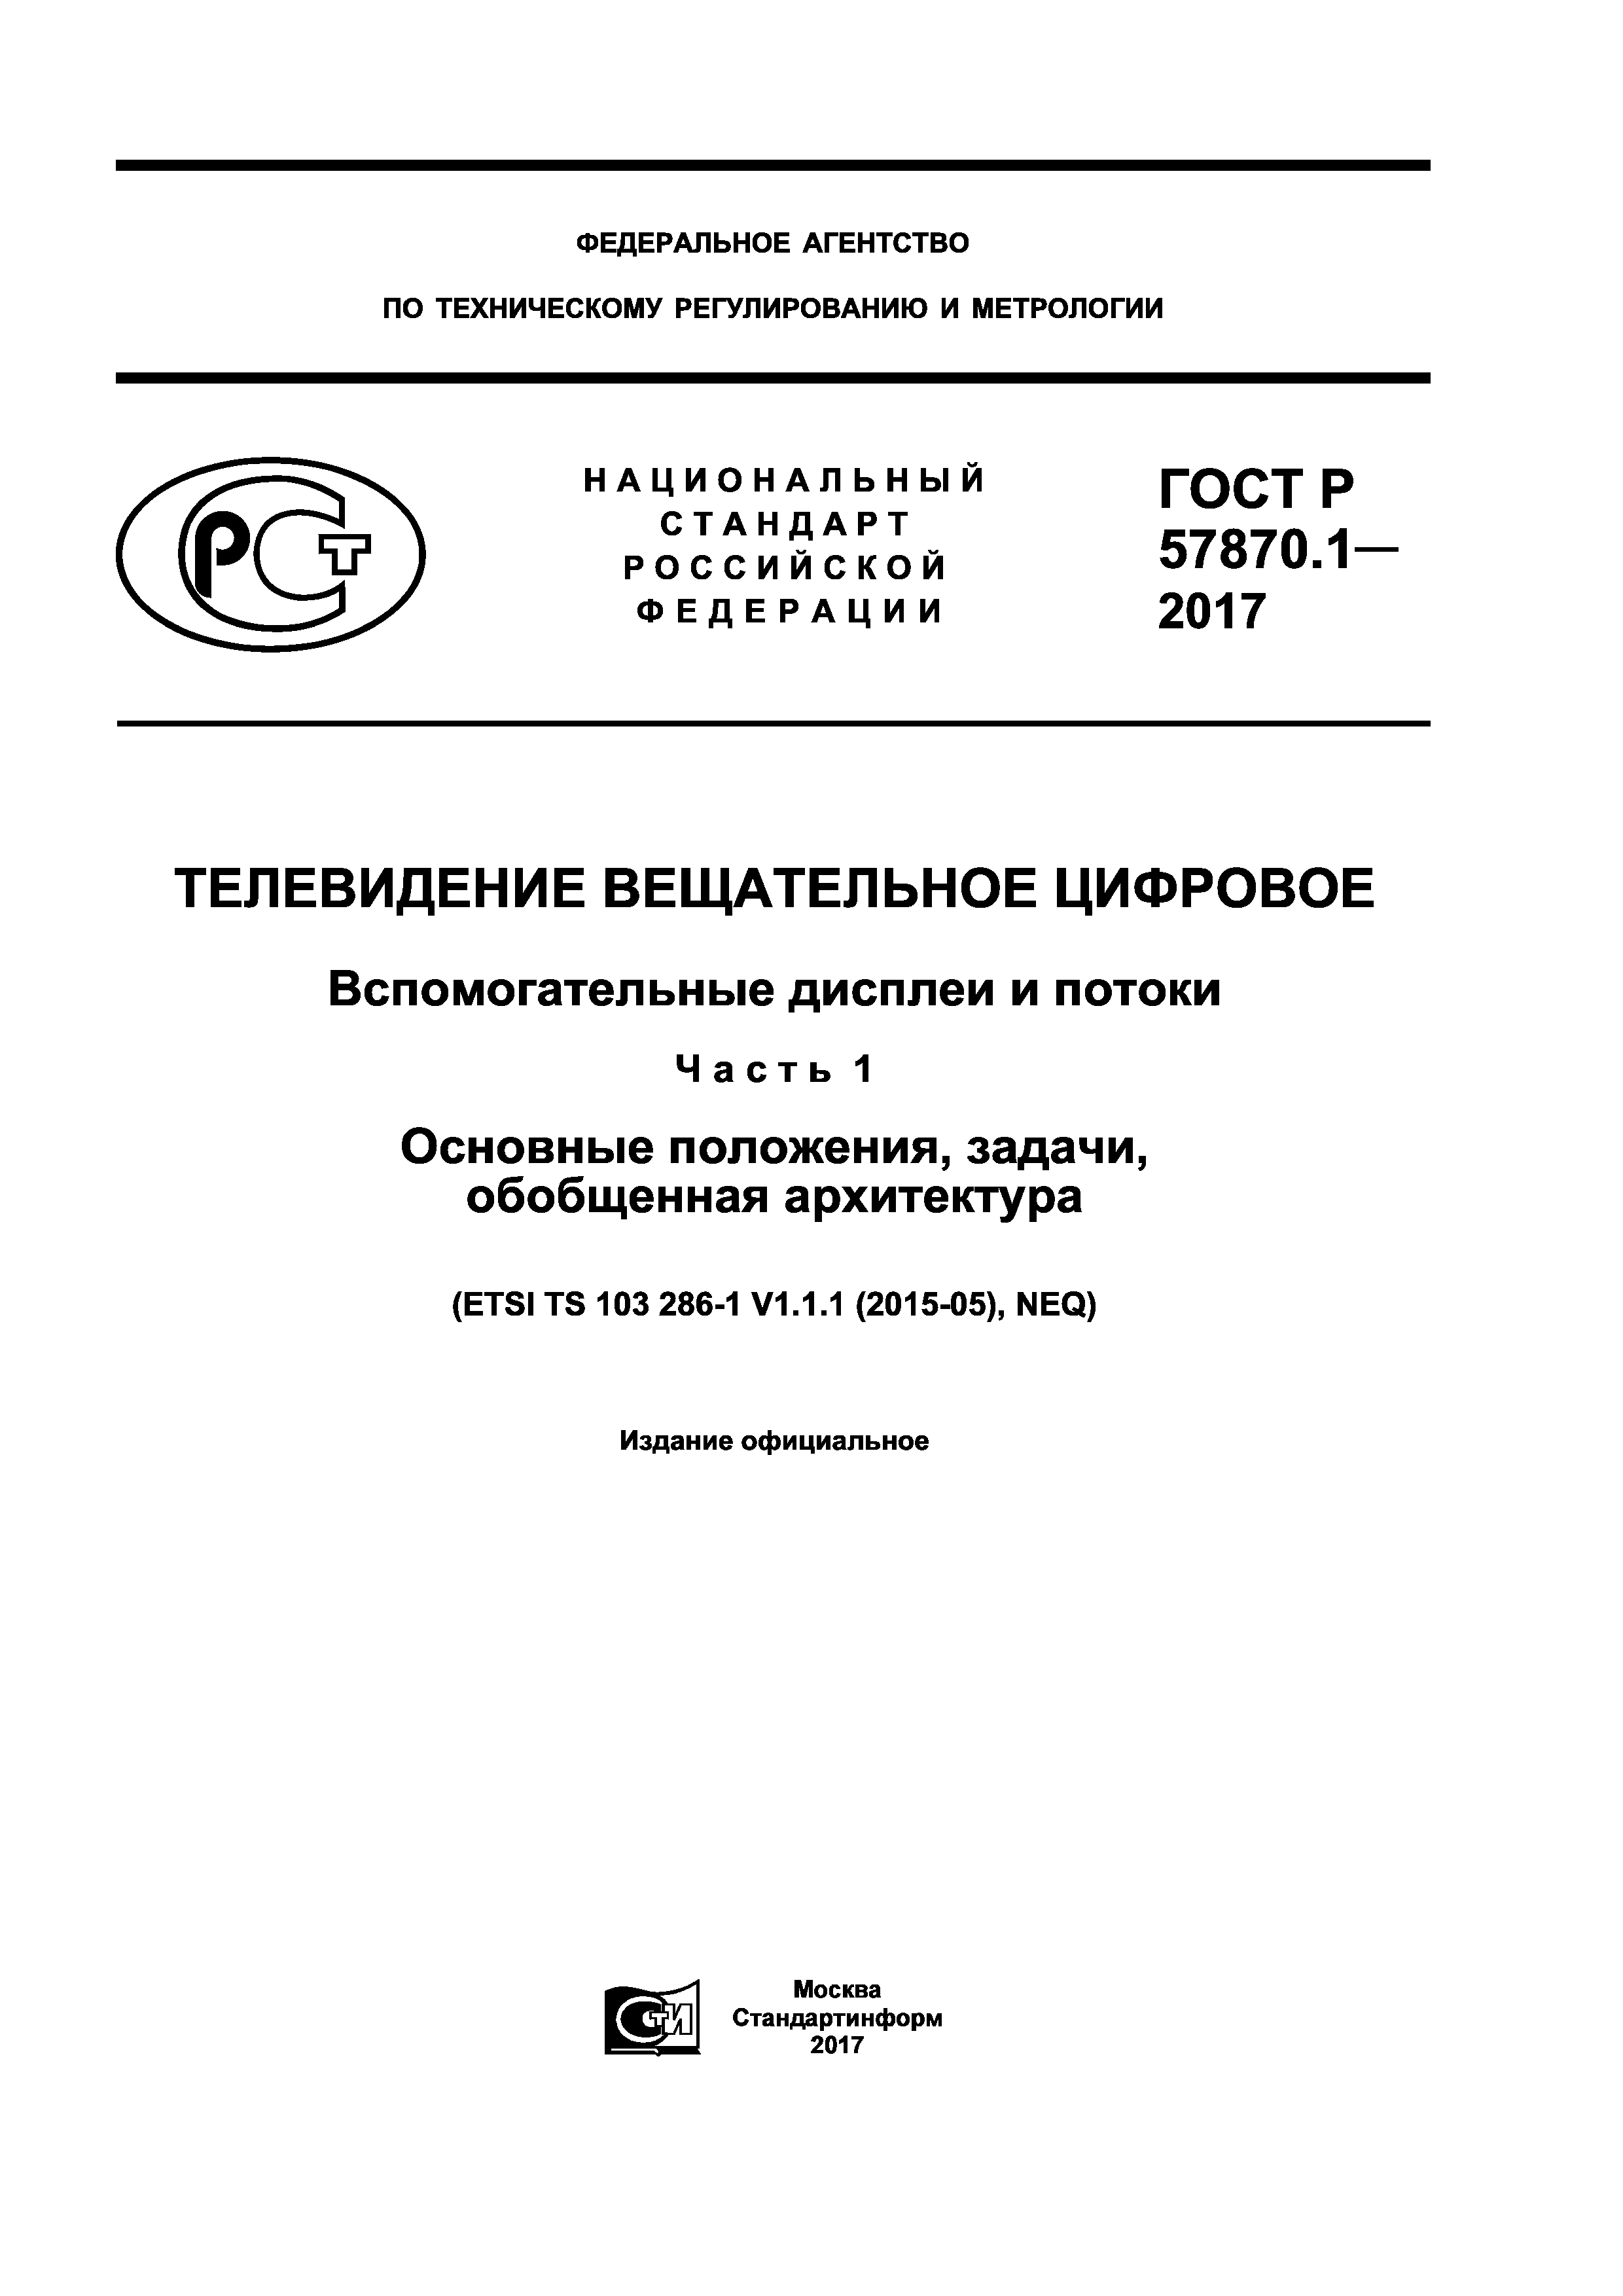 ГОСТ Р 57870.1-2017